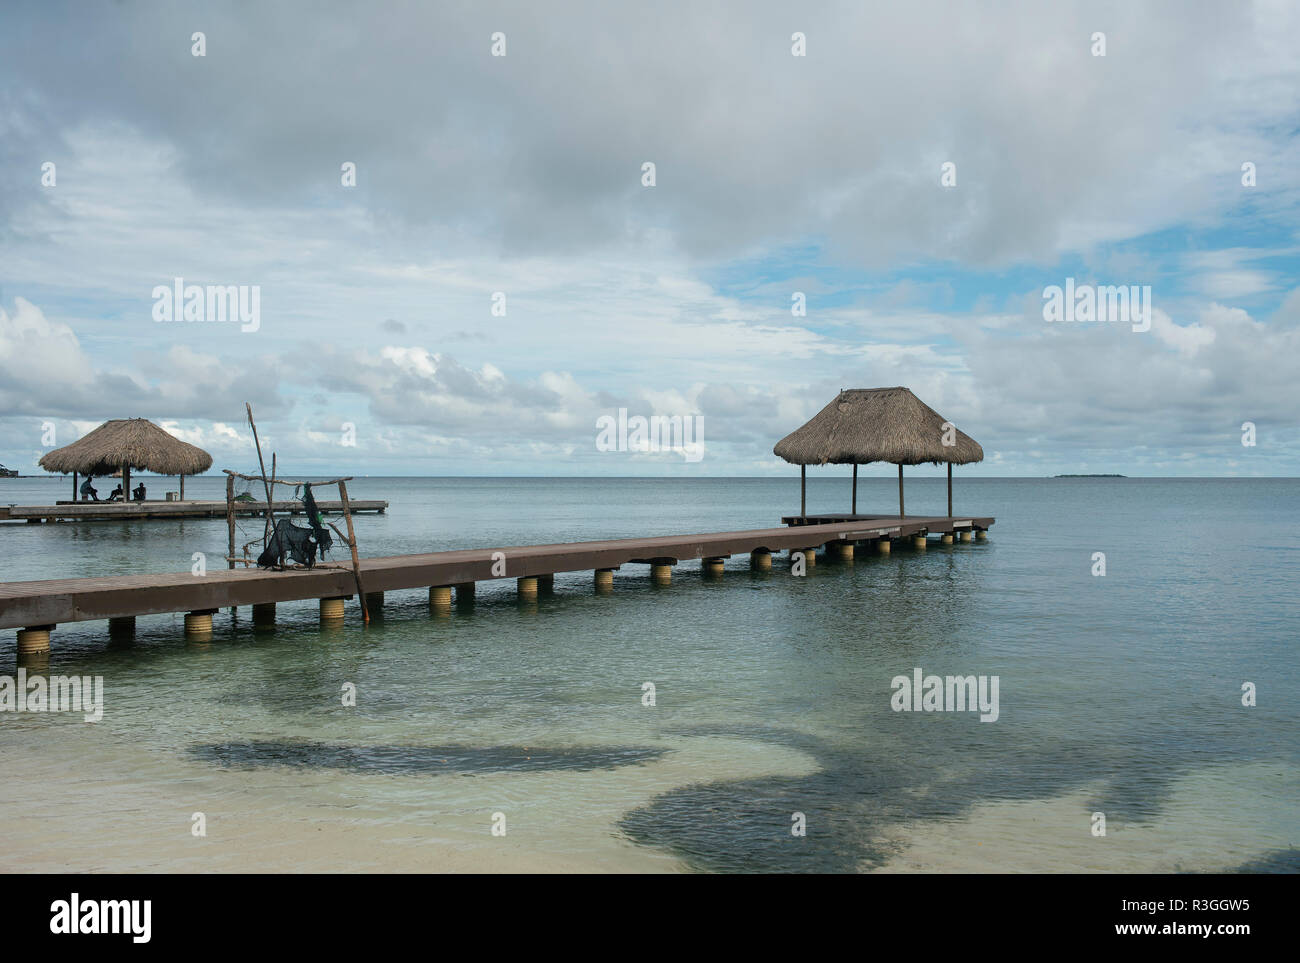 Docks with cabana (beach pavilions). Simple seascape shot from Isla Grande, Rosario Islands. Cartagena de Indias, Colombia. Oct 2018 Stock Photo